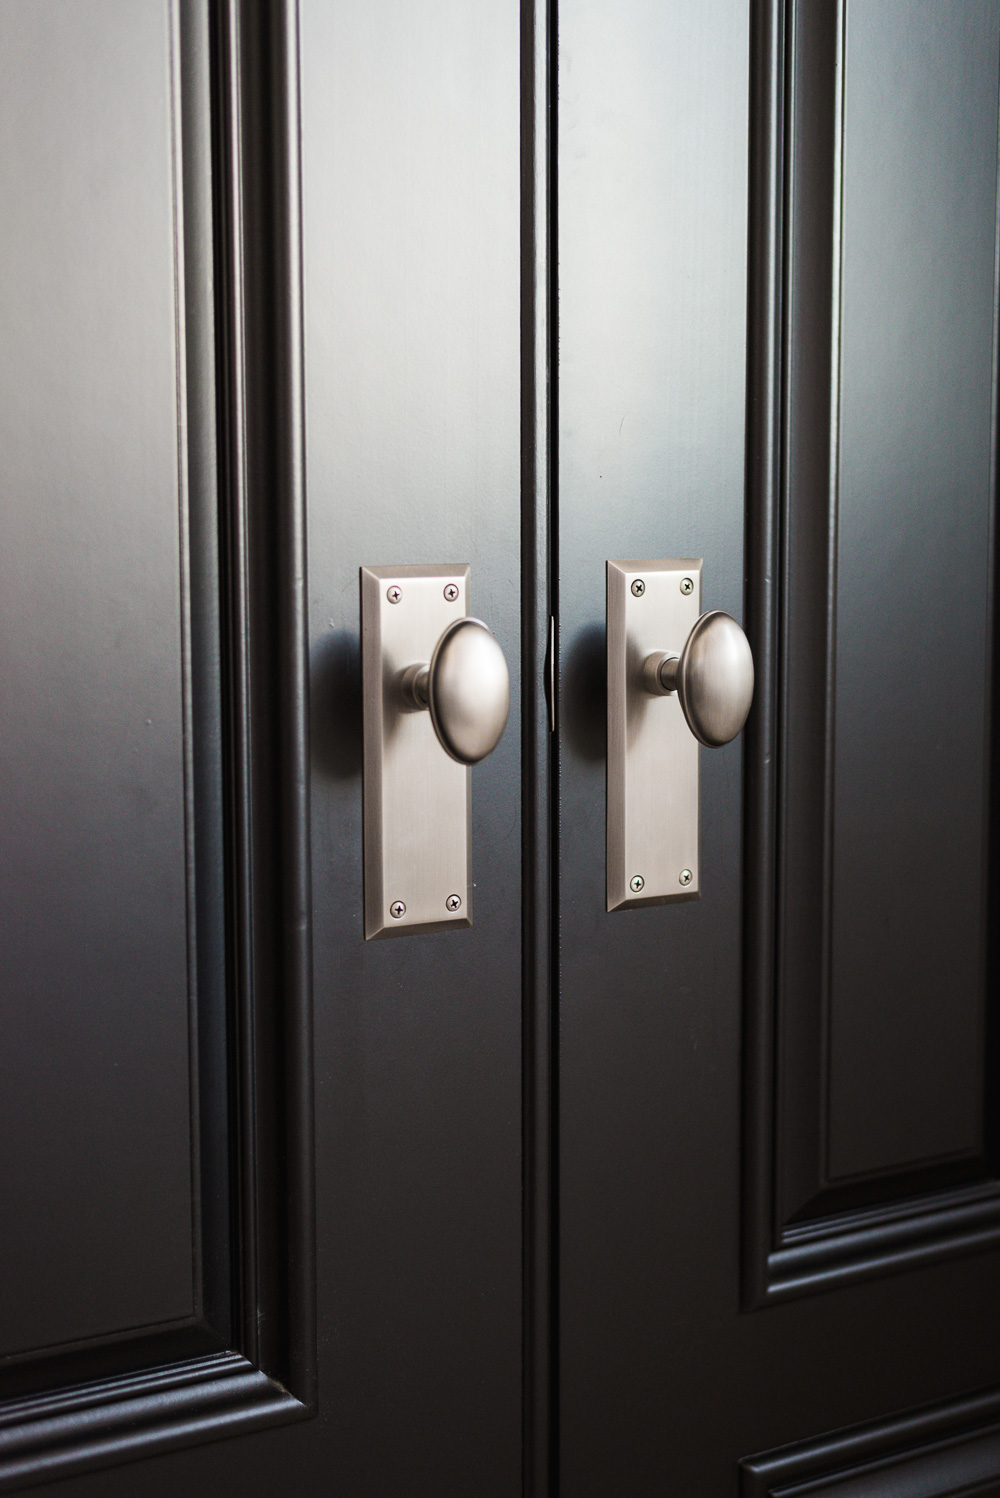 Vintage pewter door knobs on black interior door. Great sources in this blog post for antique style door knobs!